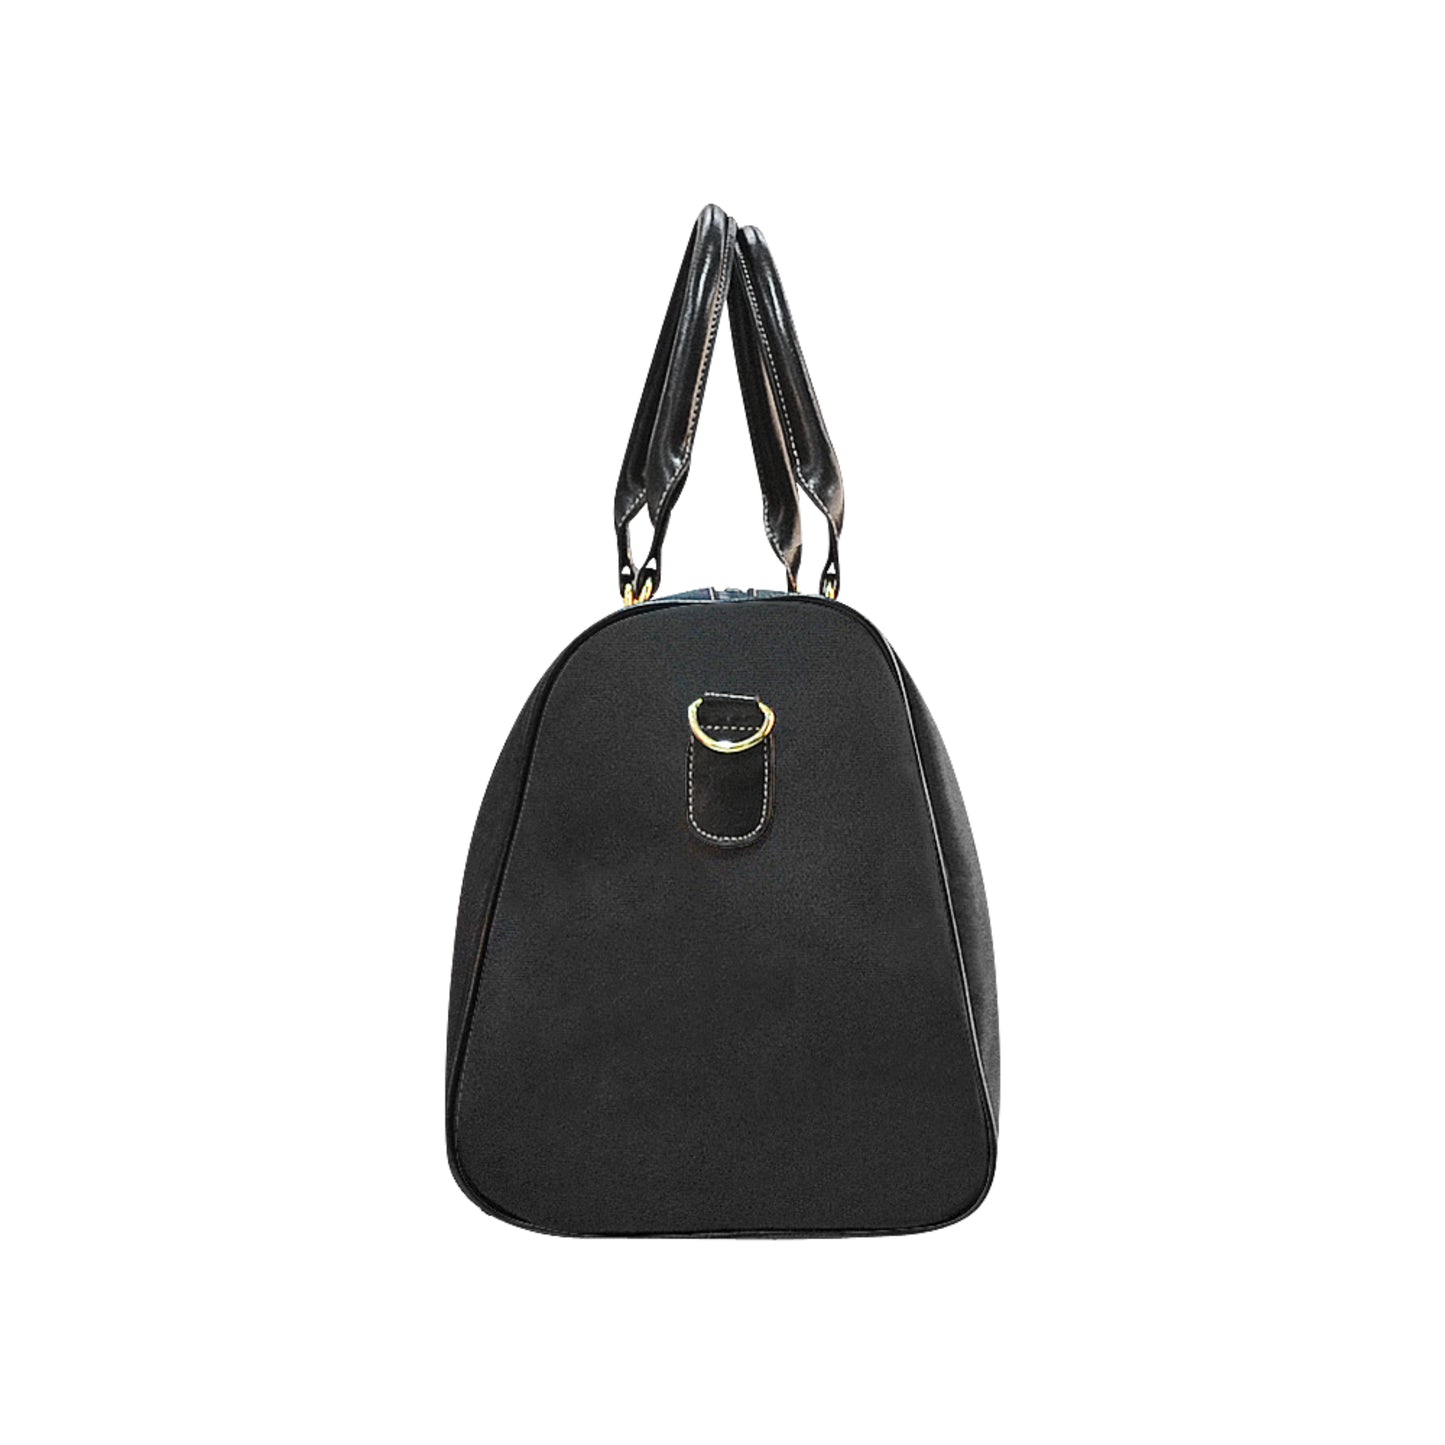 New Waterproof Travel Bag/Small Black